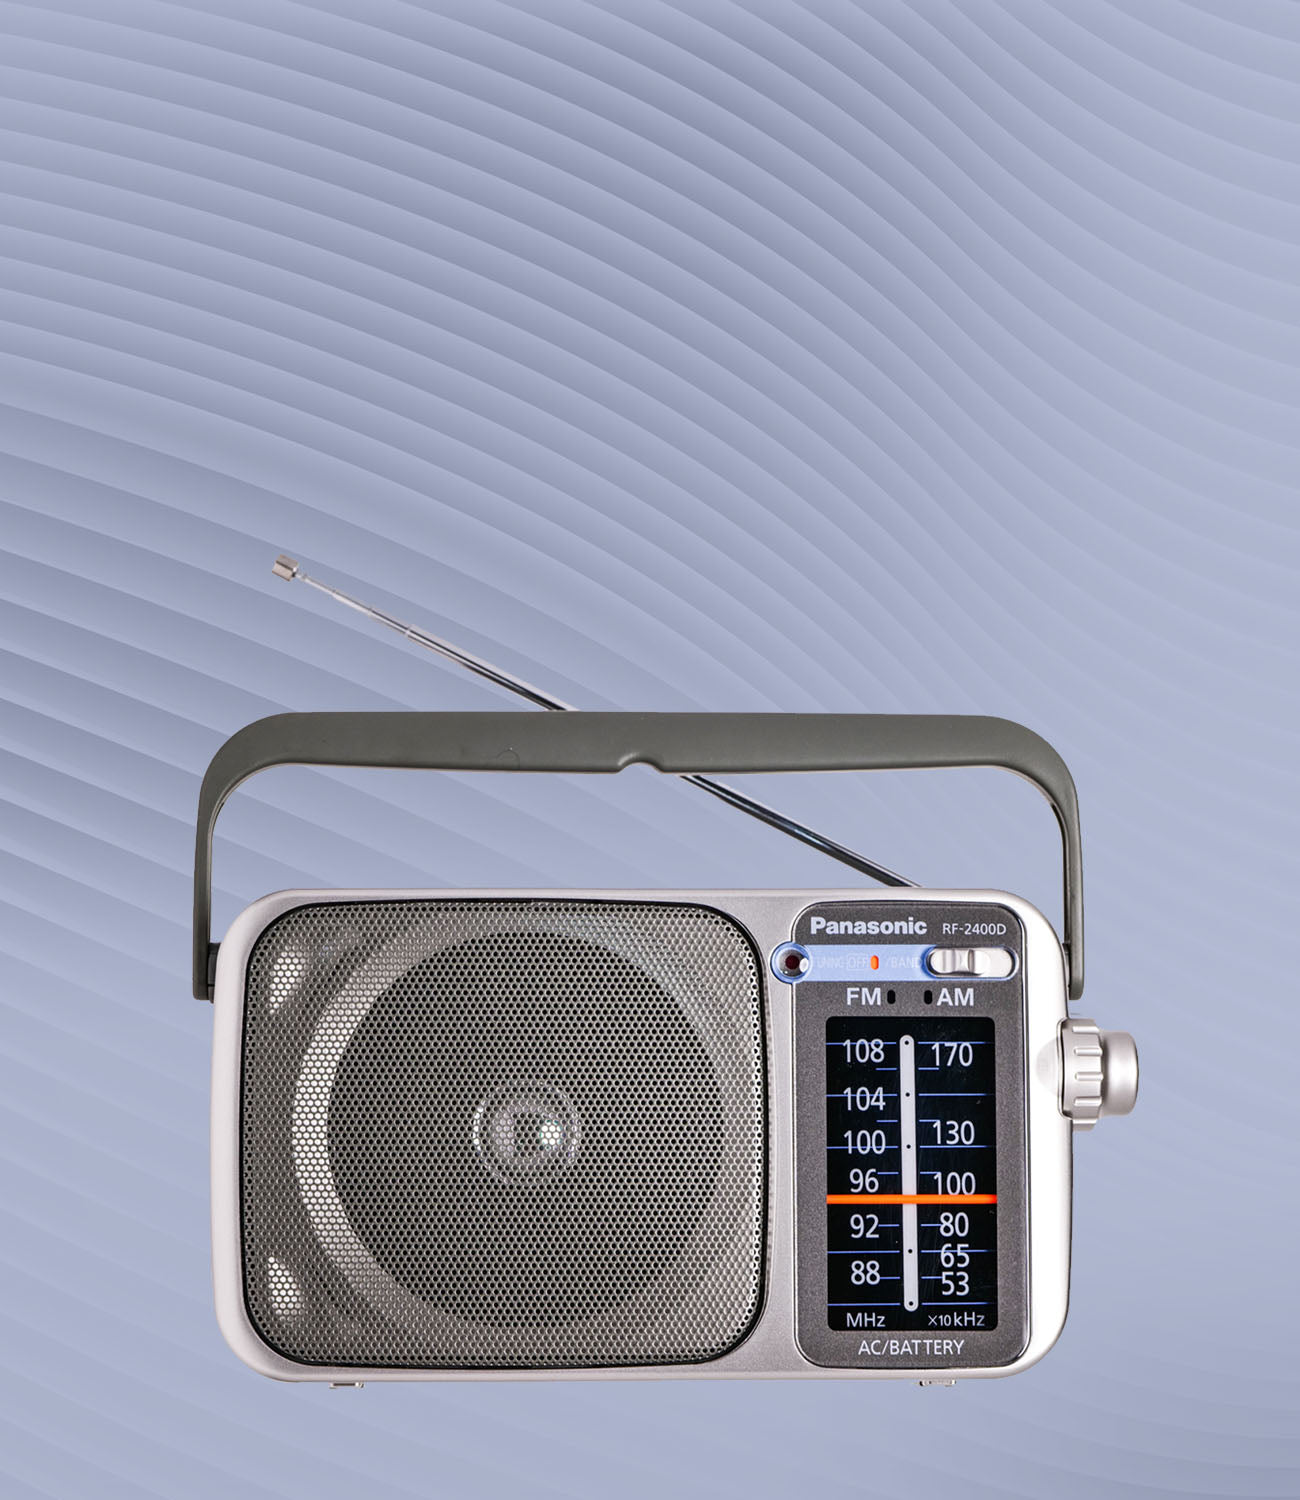 Panasonic RF-2400D AM / FM Radio, Silver 